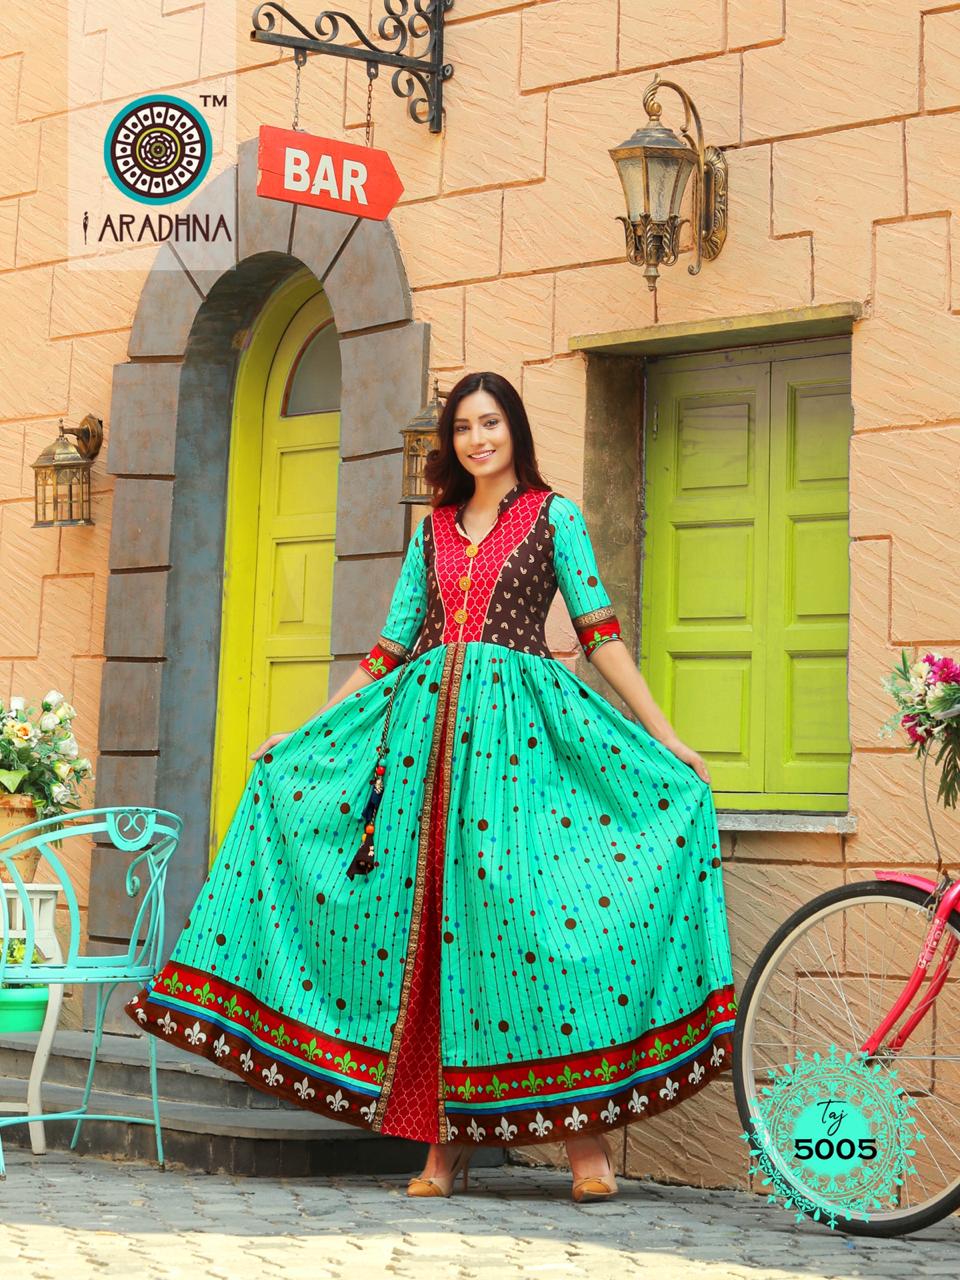 Aradhna Presents Taj Vol-5 Heavy Rayon With Embroidery Work Gown Style Kurtis Catalog Wholesaler